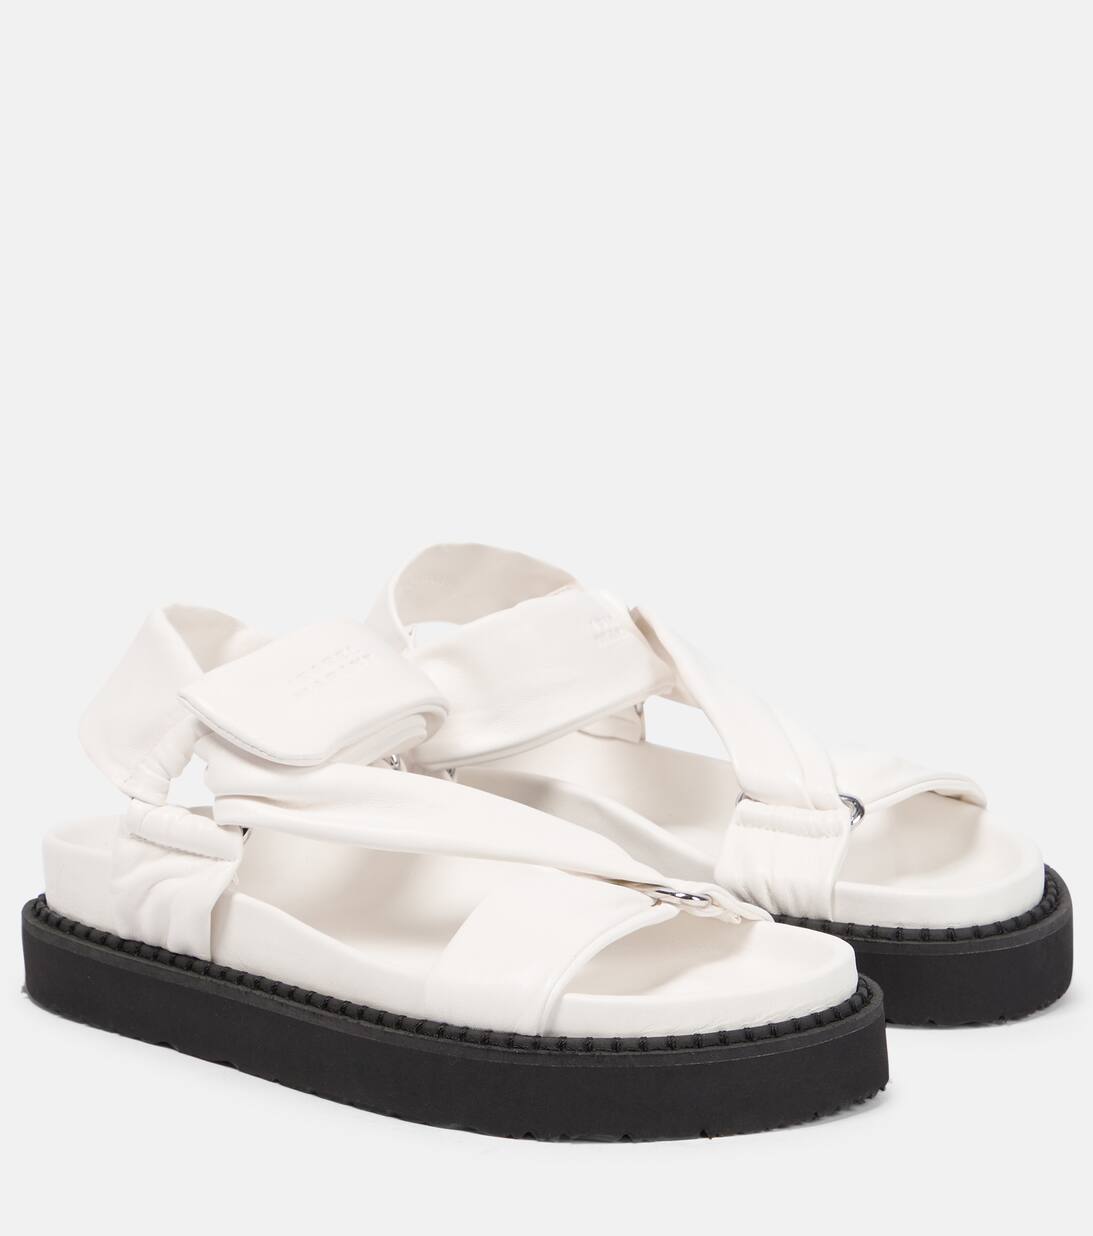 IM Naori Sandals in White